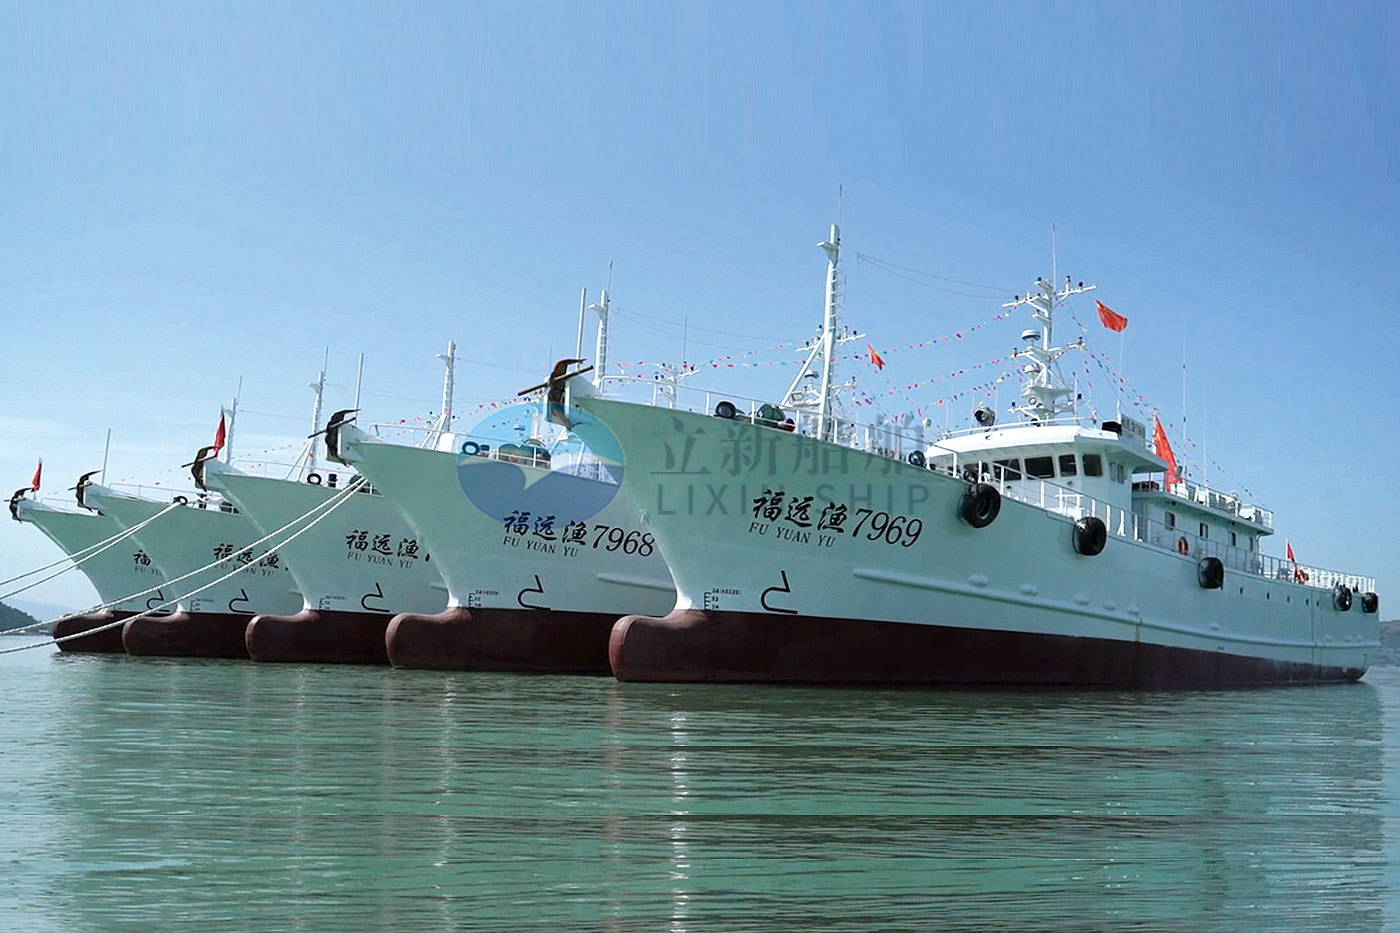 48.8-metre ocean-going longline fishing trawler